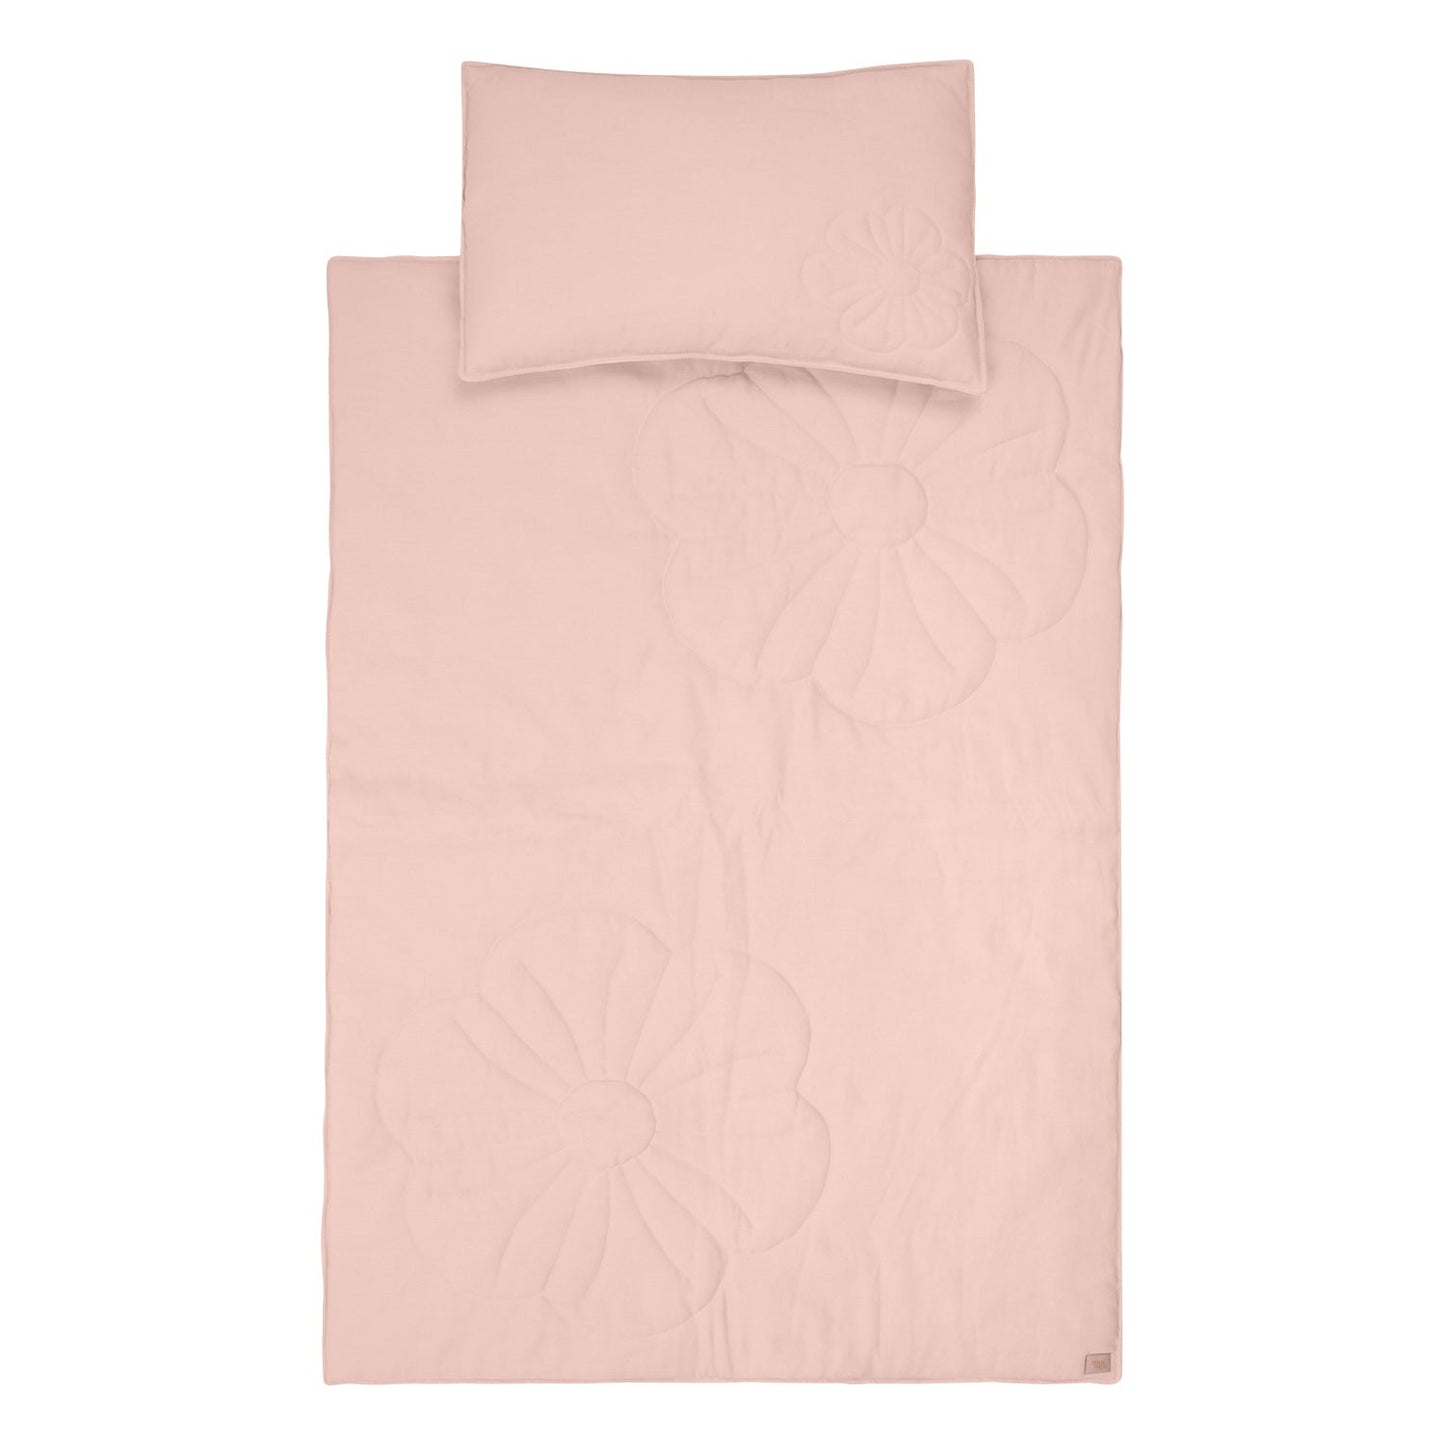 Linen "Light Pink" Flower Child Cover Set (Large) by Moi Mili